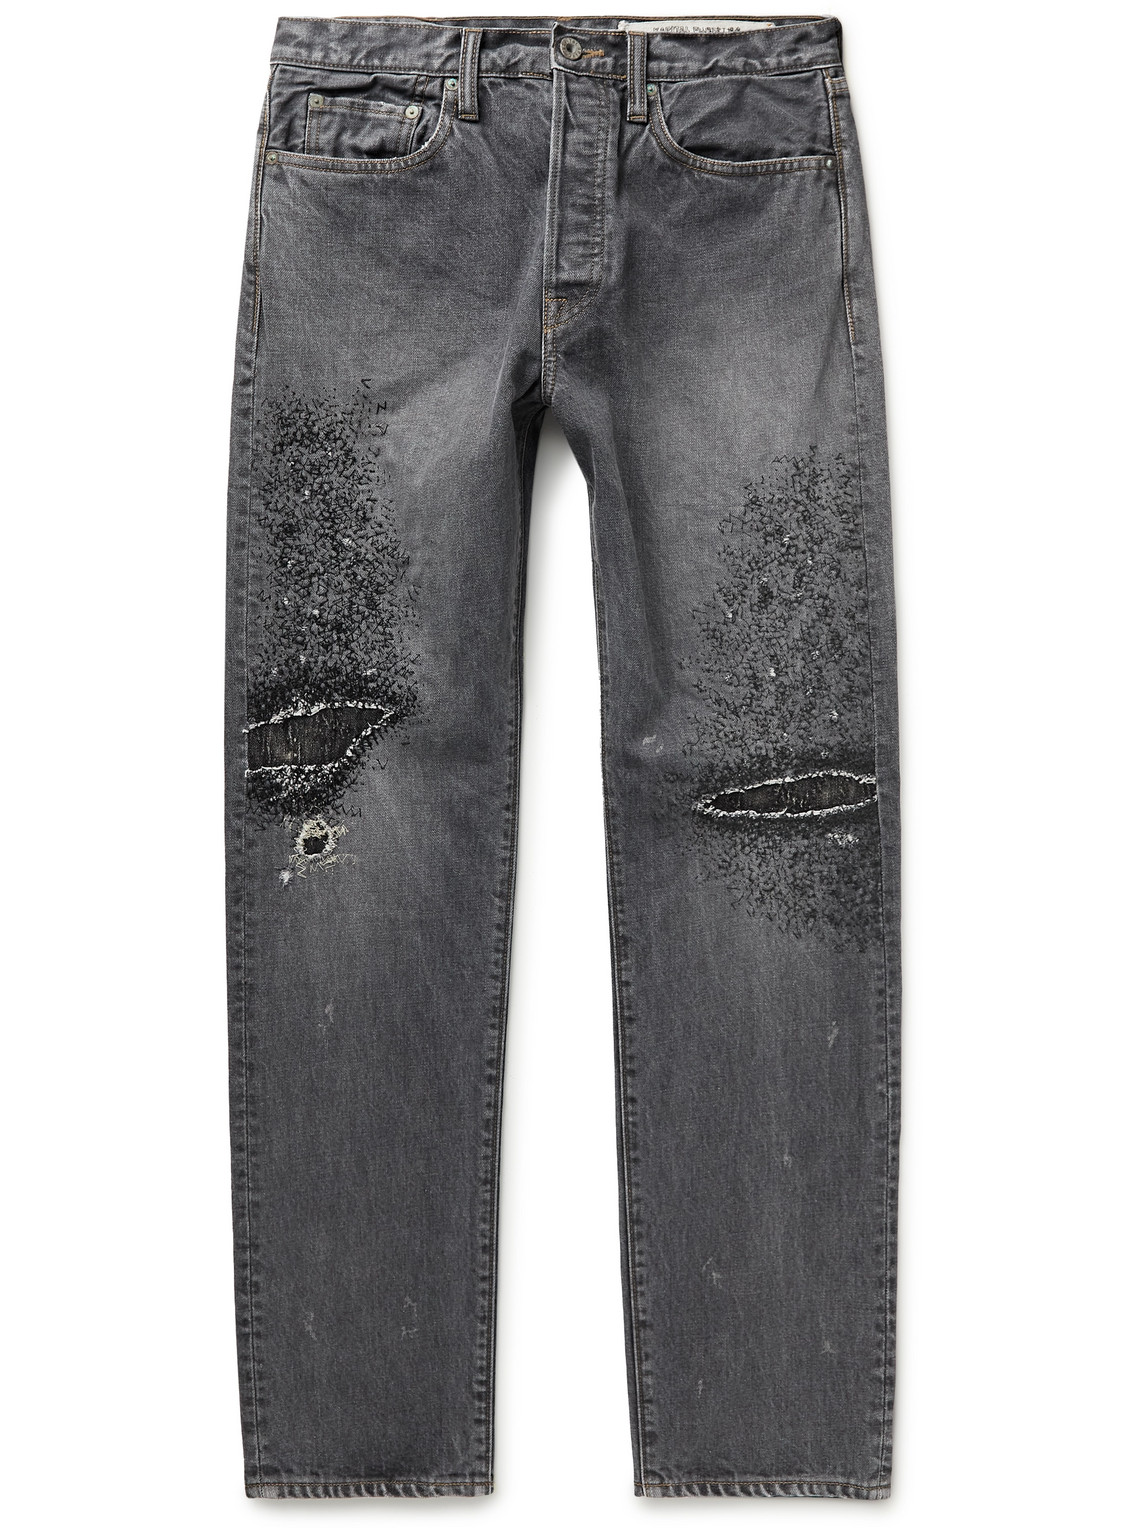 Monkey CISCO Distressed Denim Jeans